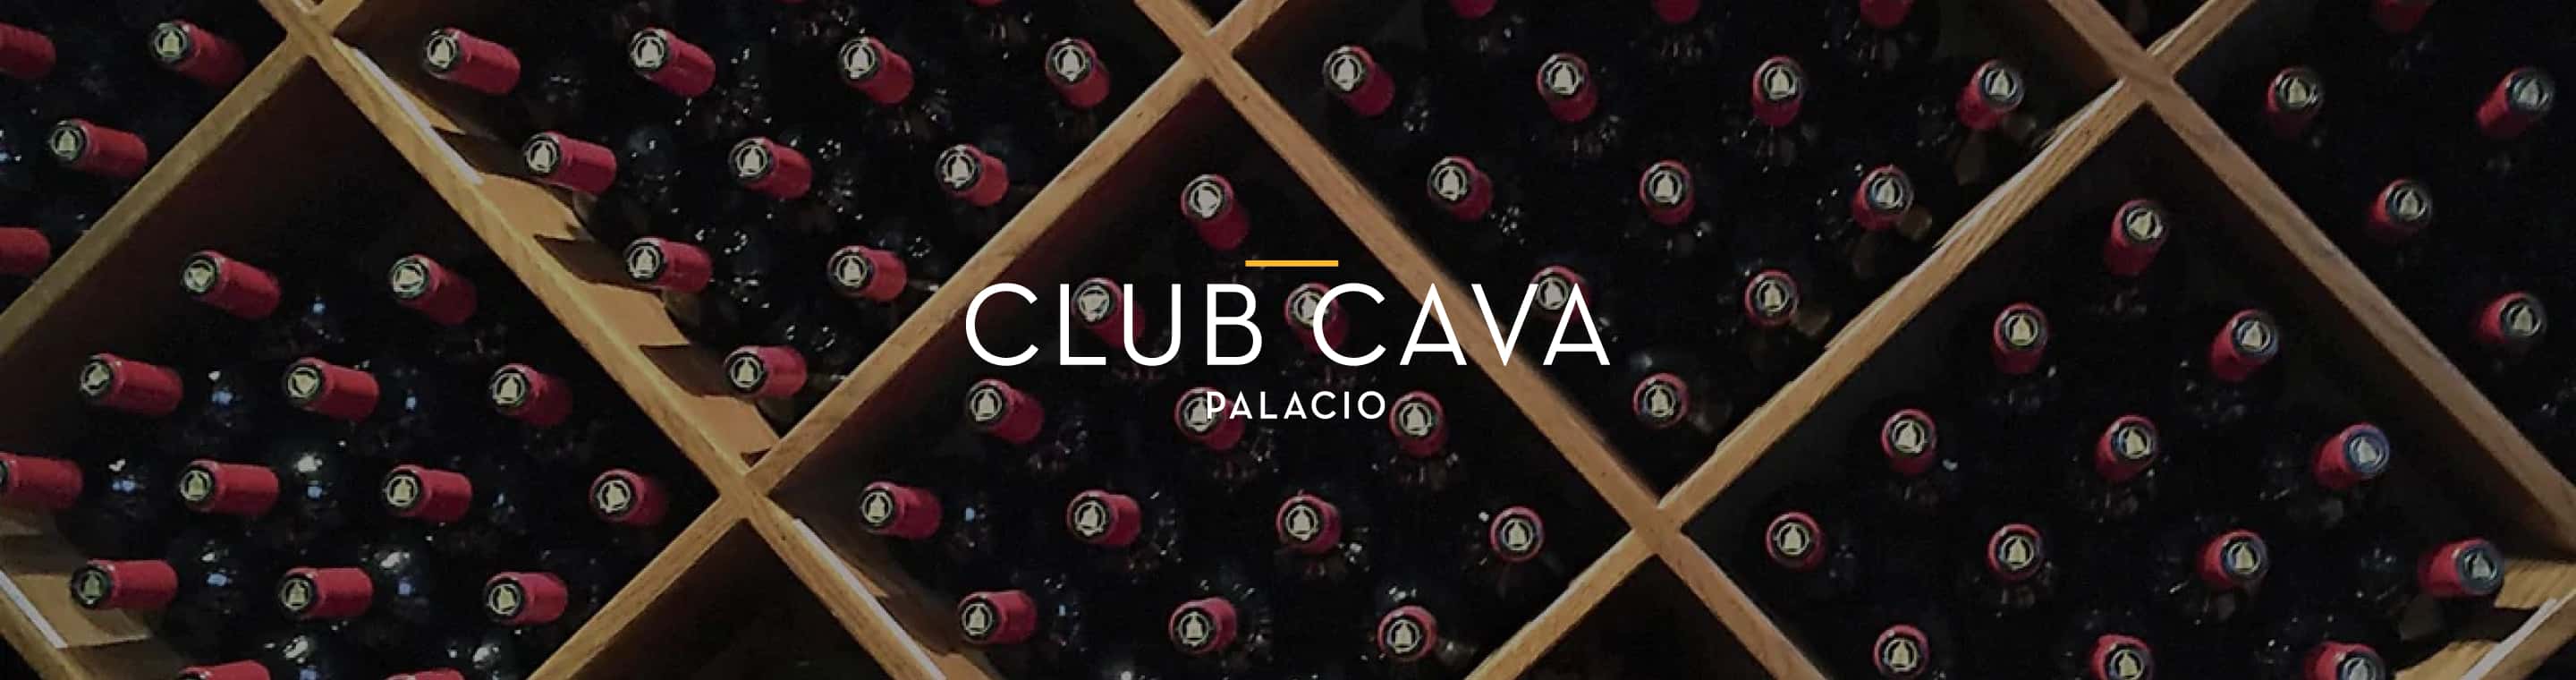 CLUB CAVA PALACIO